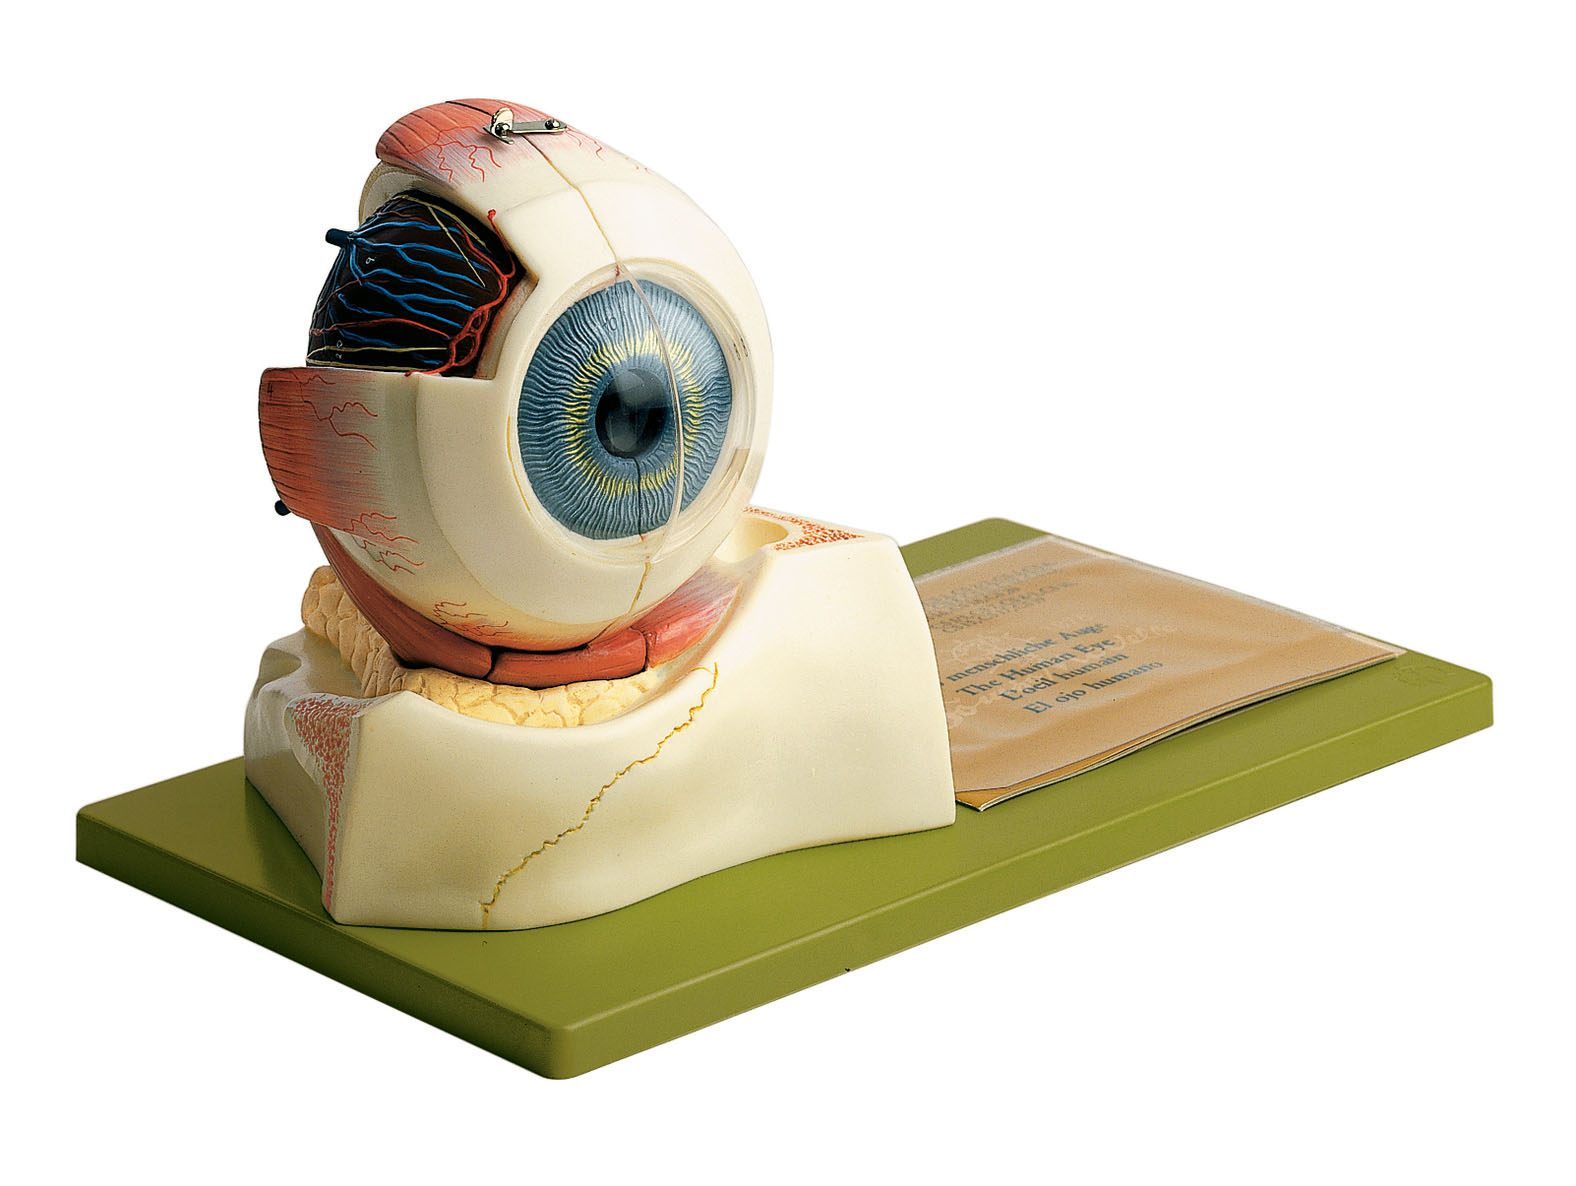 Eyeball – Separates Into 3 Parts